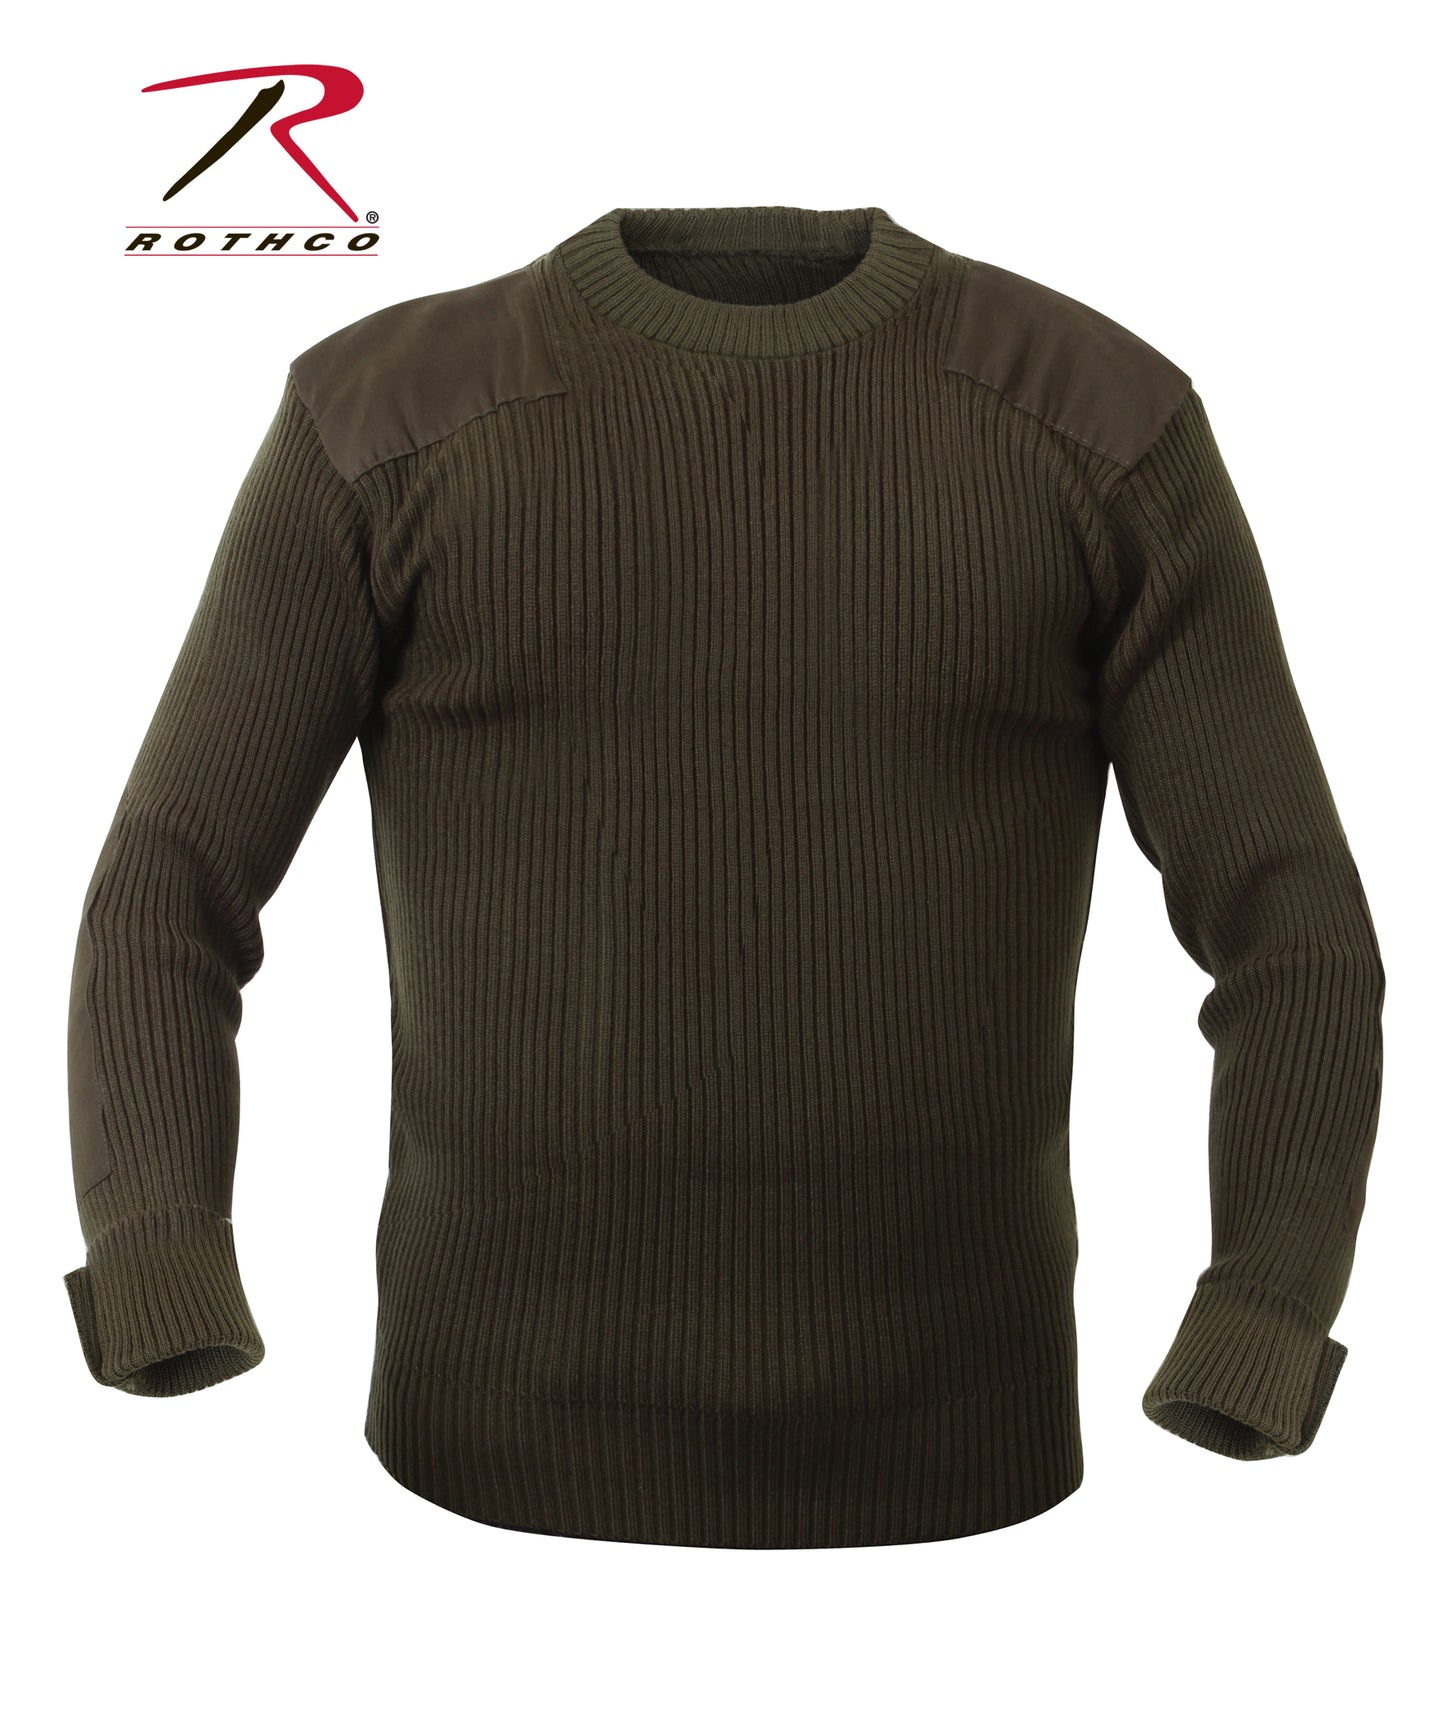 Milspec G.I. Style Acrylic Commando Sweater Big & Tall Shirts MilTac Tactical Military Outdoor Gear Australia